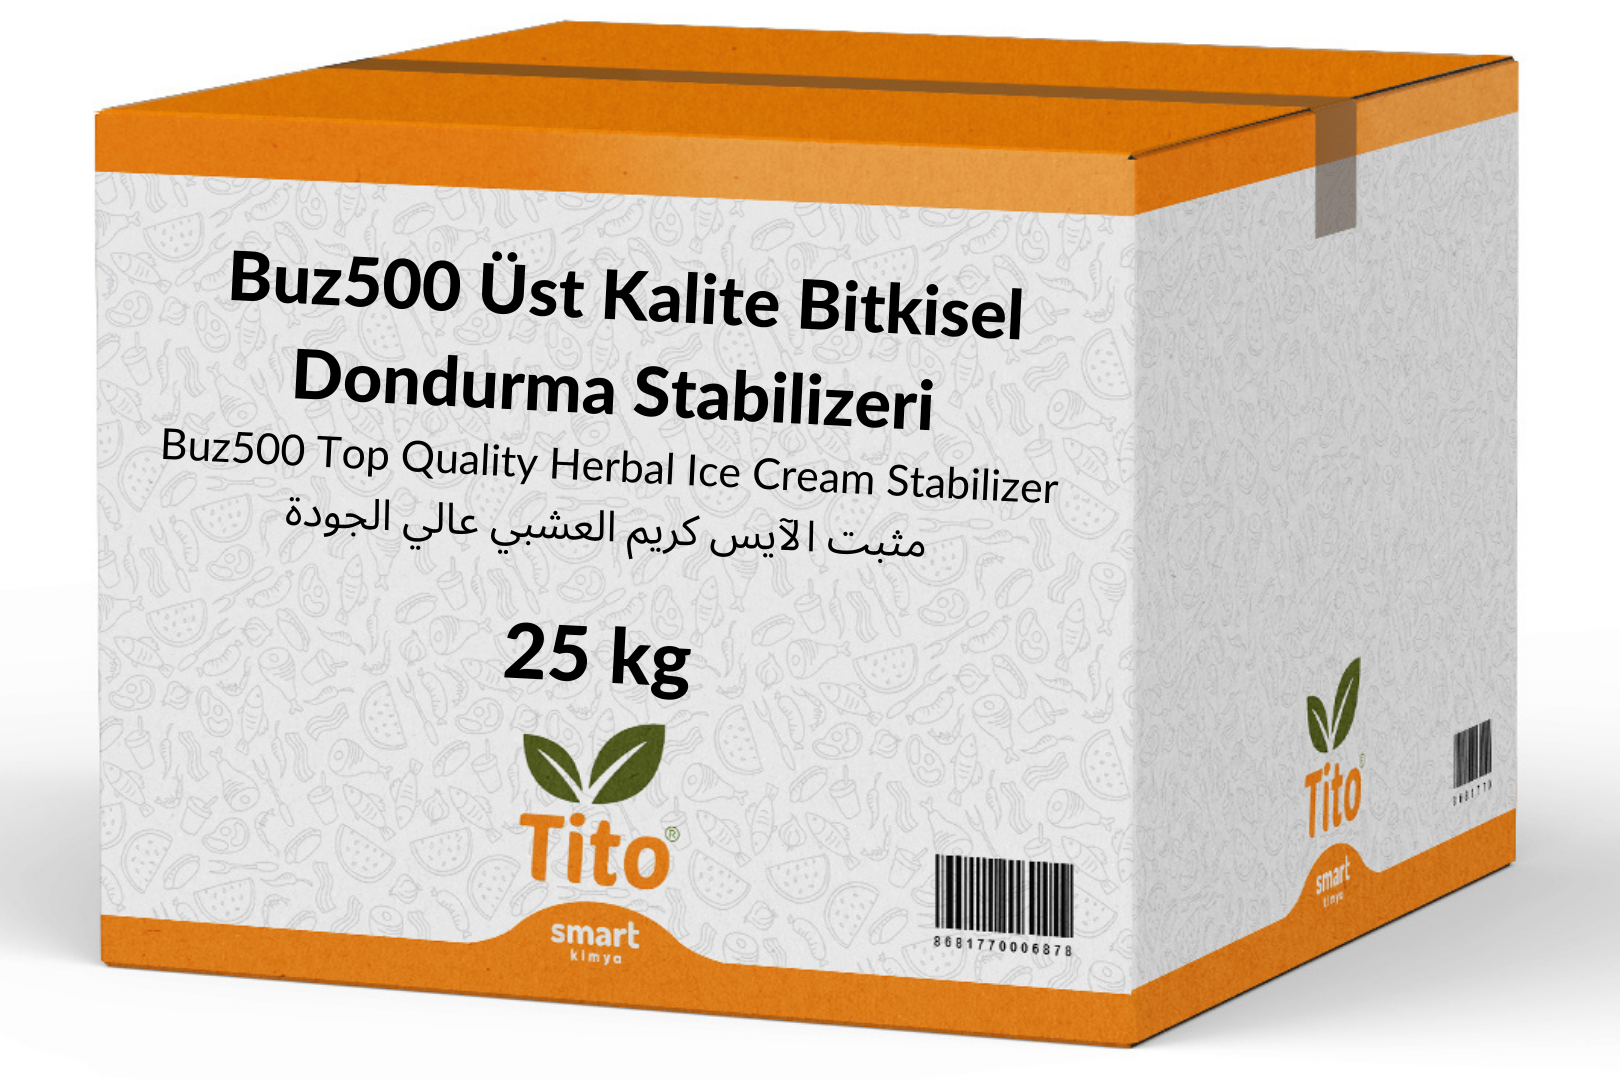 Buz500 Üst Kalite Bitkisel Dondurma Stabilizeri 25 kg